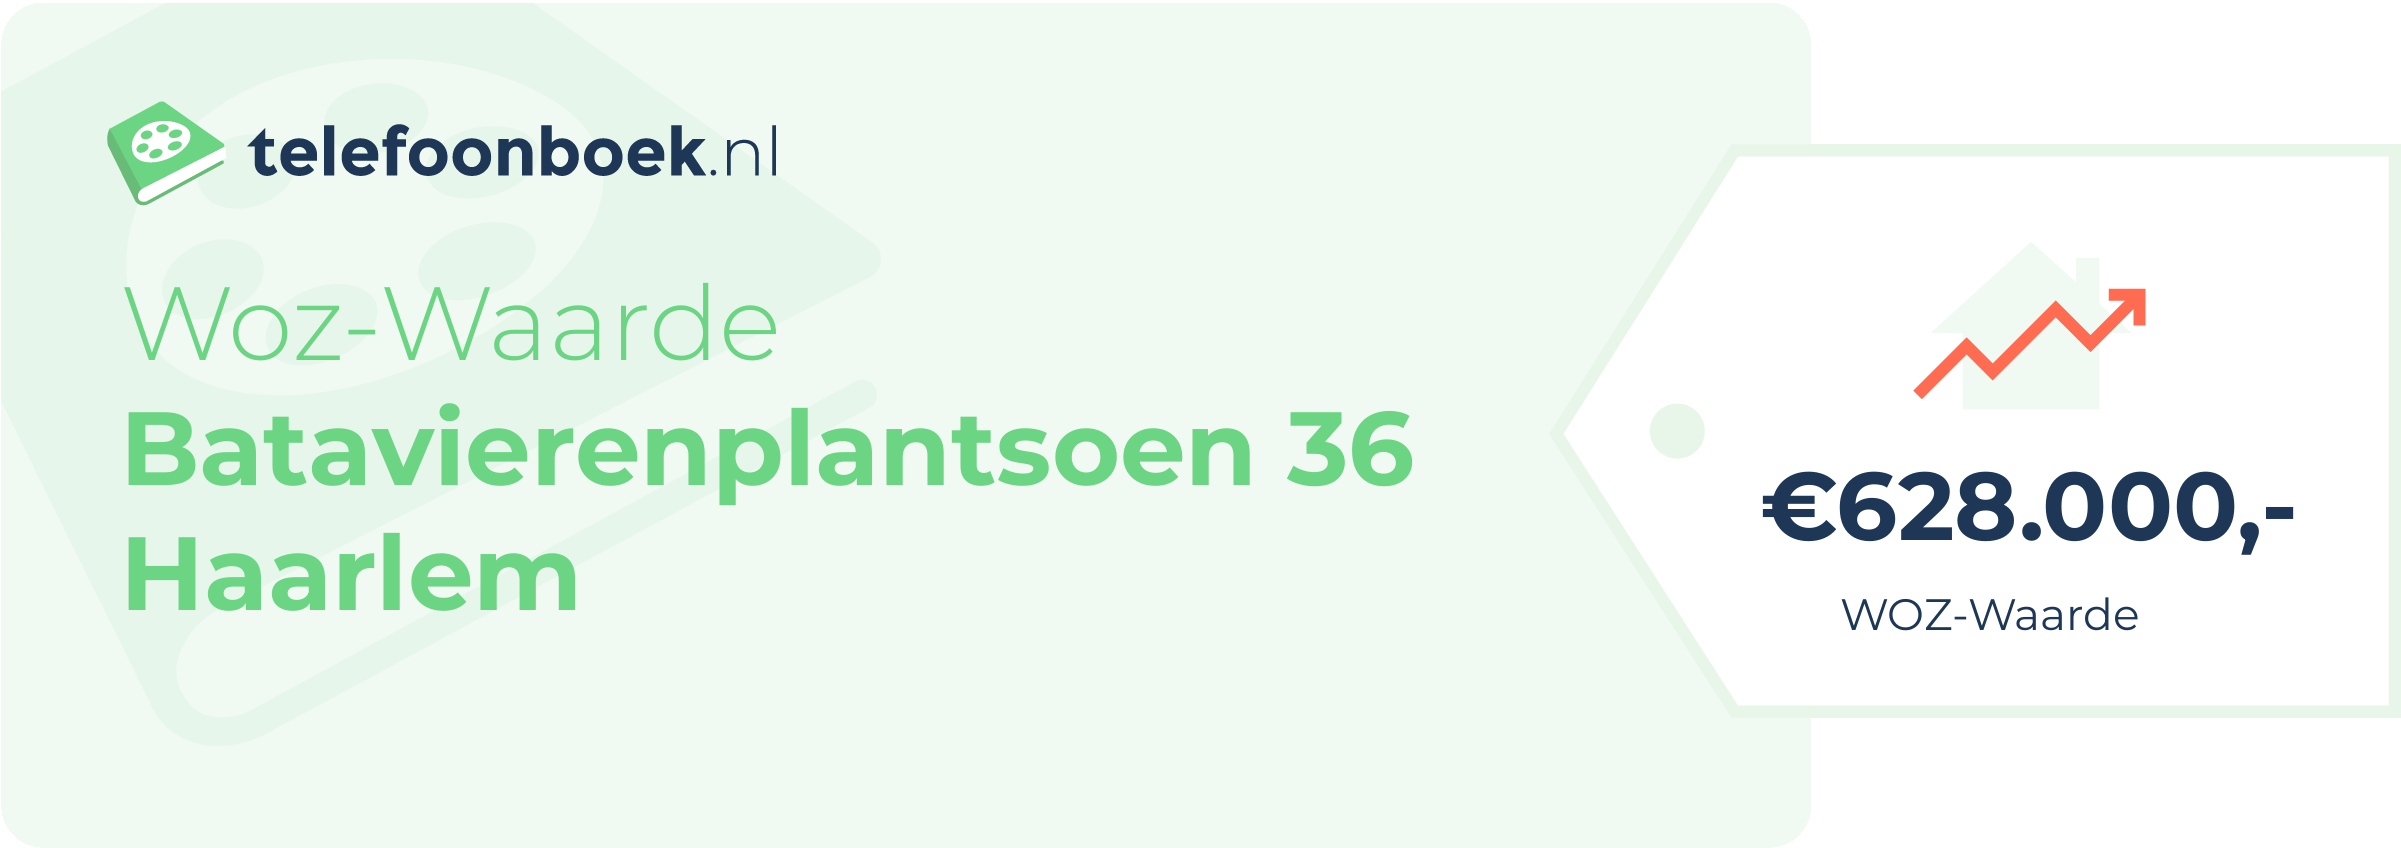 WOZ-waarde Batavierenplantsoen 36 Haarlem